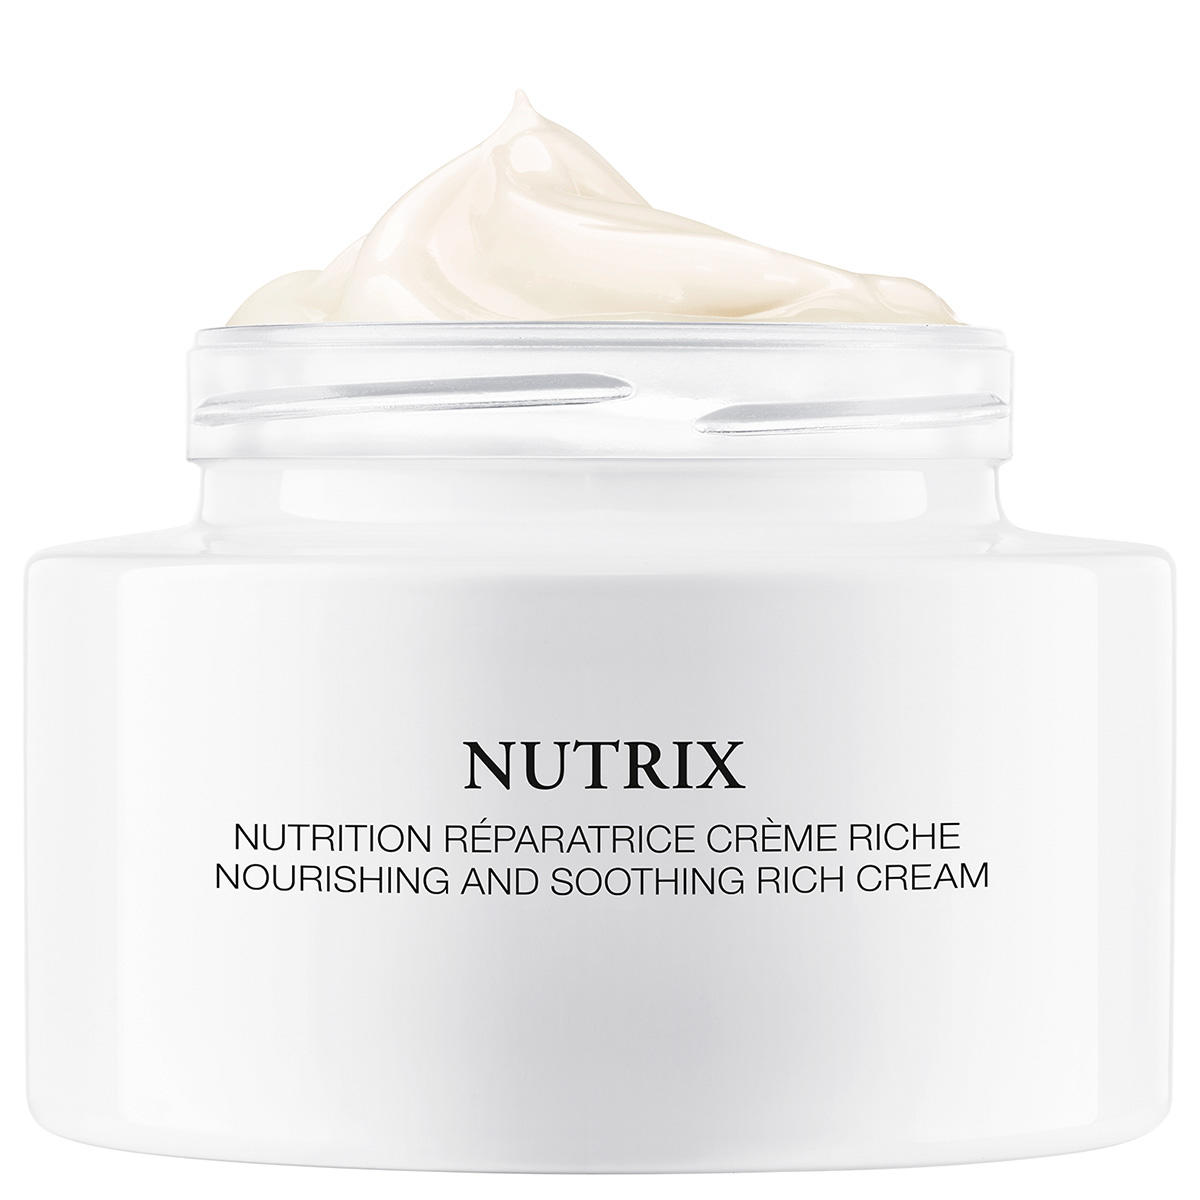 Lancôme Nutrix Nourishing and Soothing Rich Cream 75 ml - 5